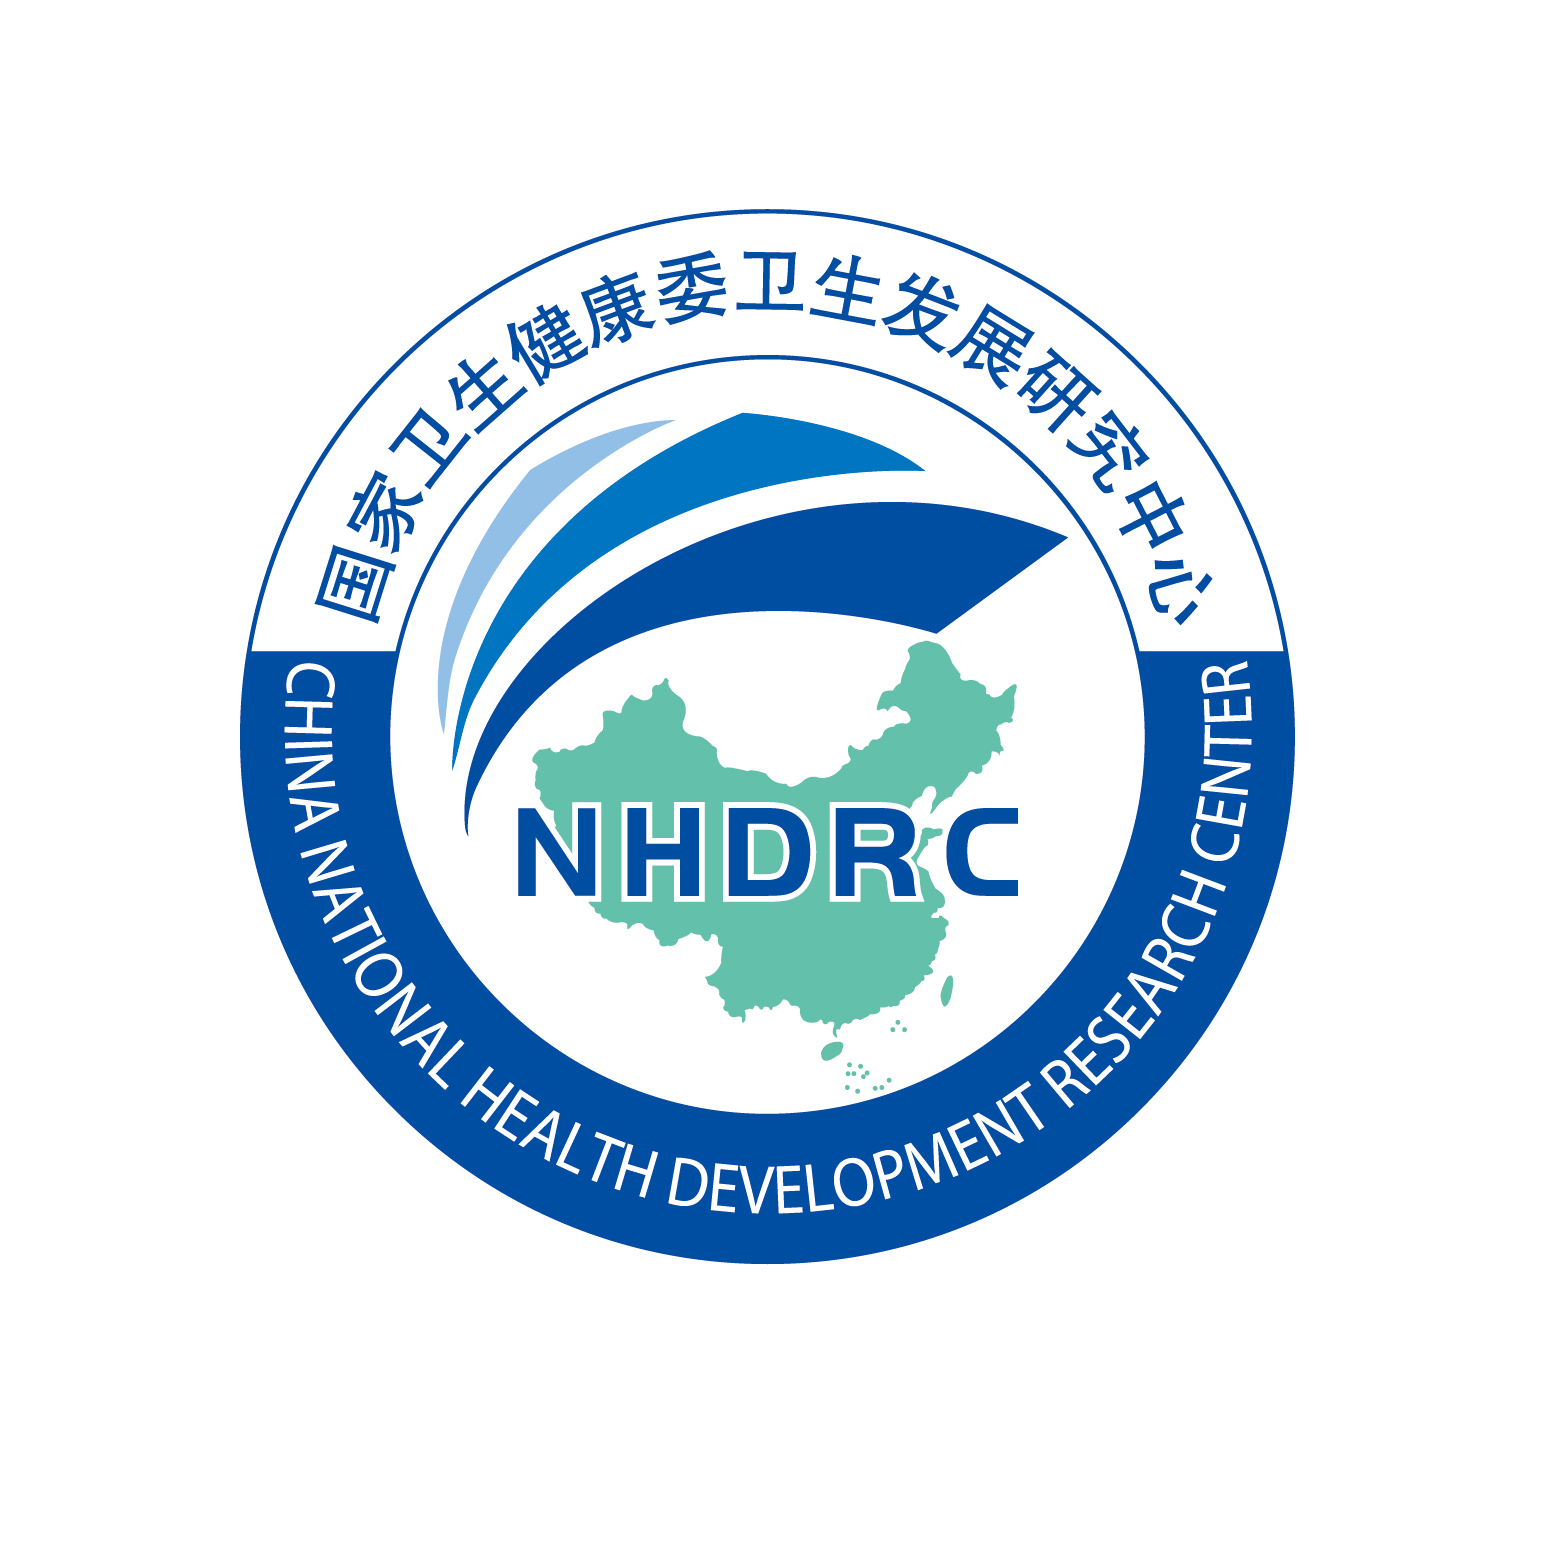 NHDRC logo - China National Health Development Research Center